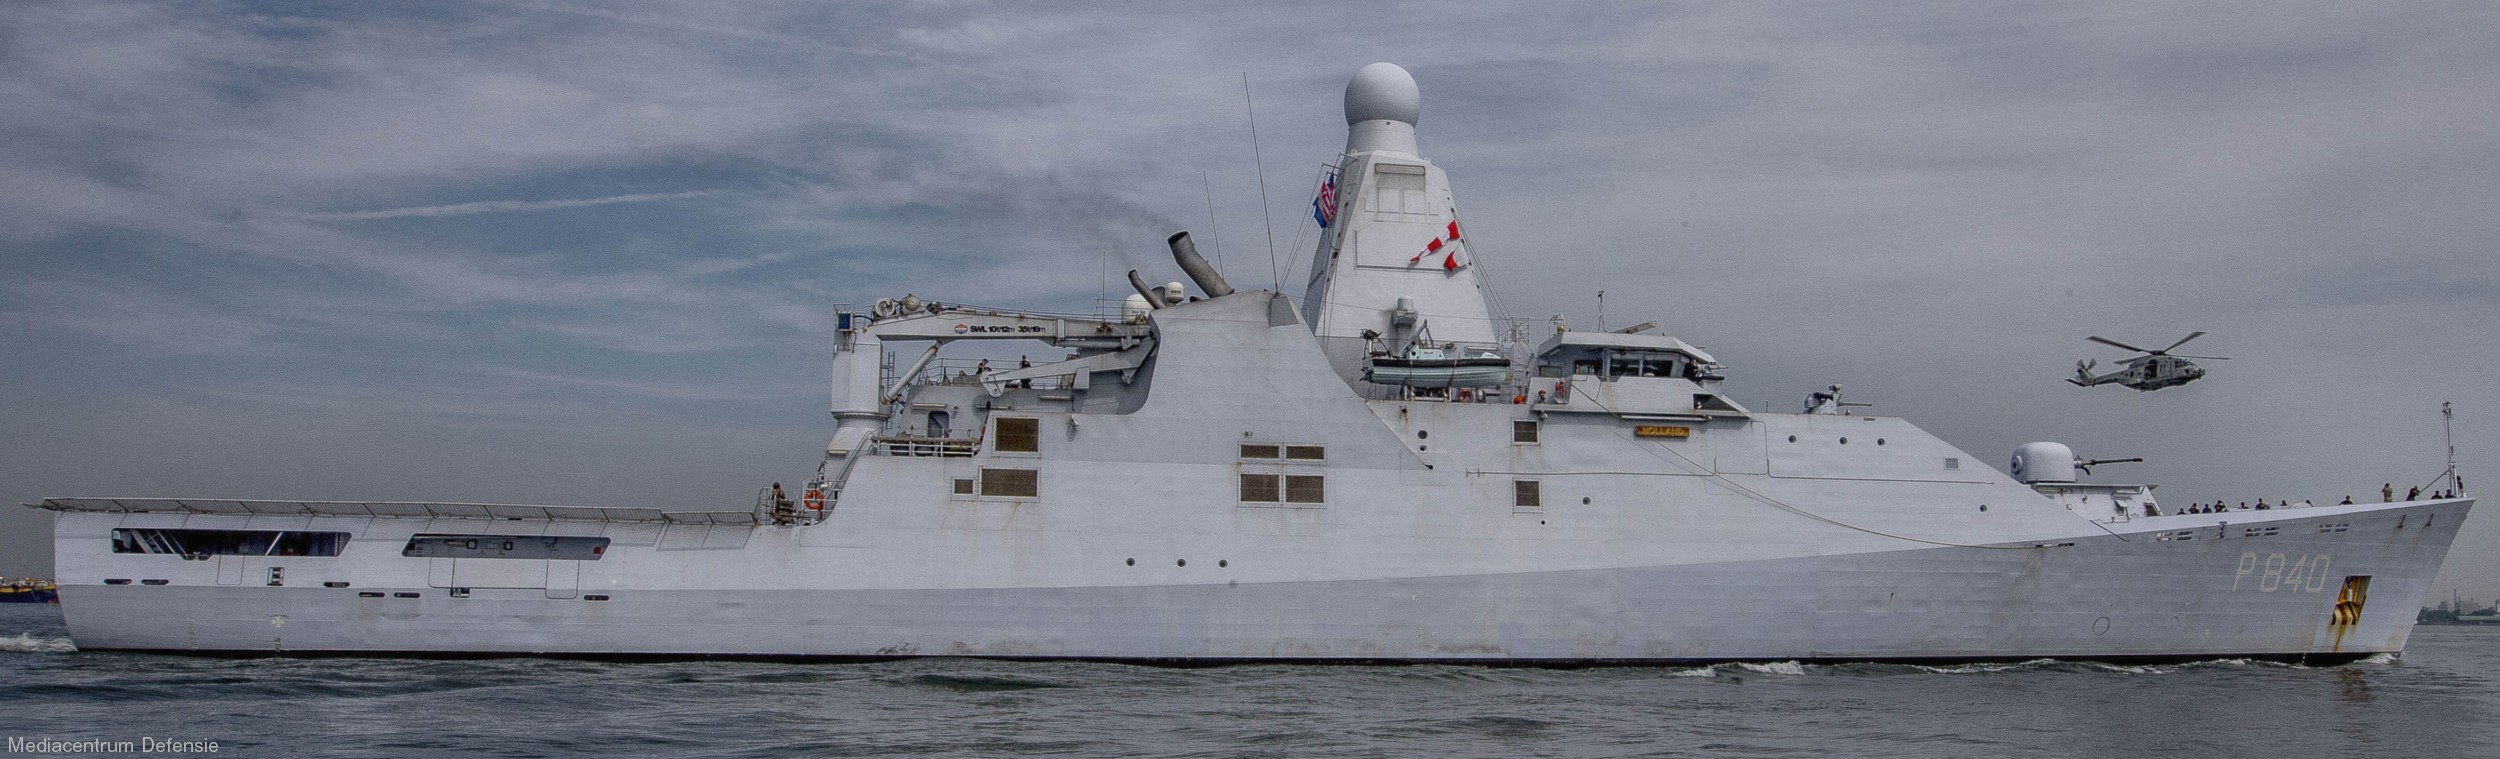 p-840 hnlms holland offshore patrol vessel opv royal netherlands navy 11